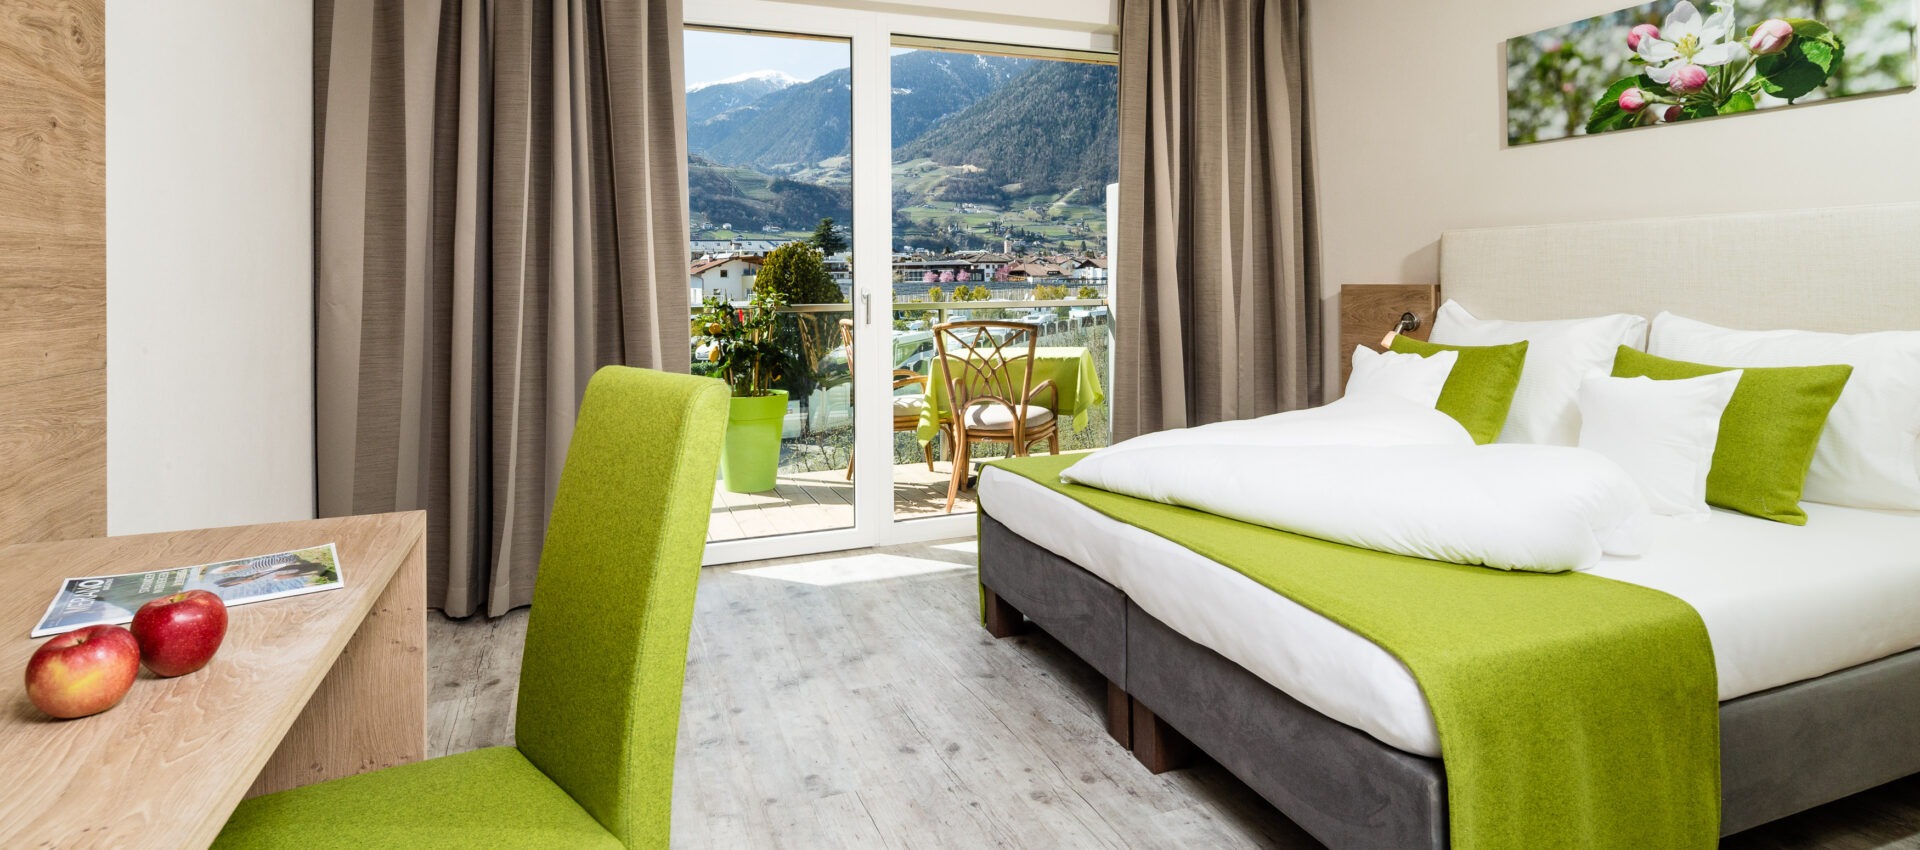 Zimmer Golden - 4 Sterne Hotel in Lana Pfeiss - Meran - Südtirol